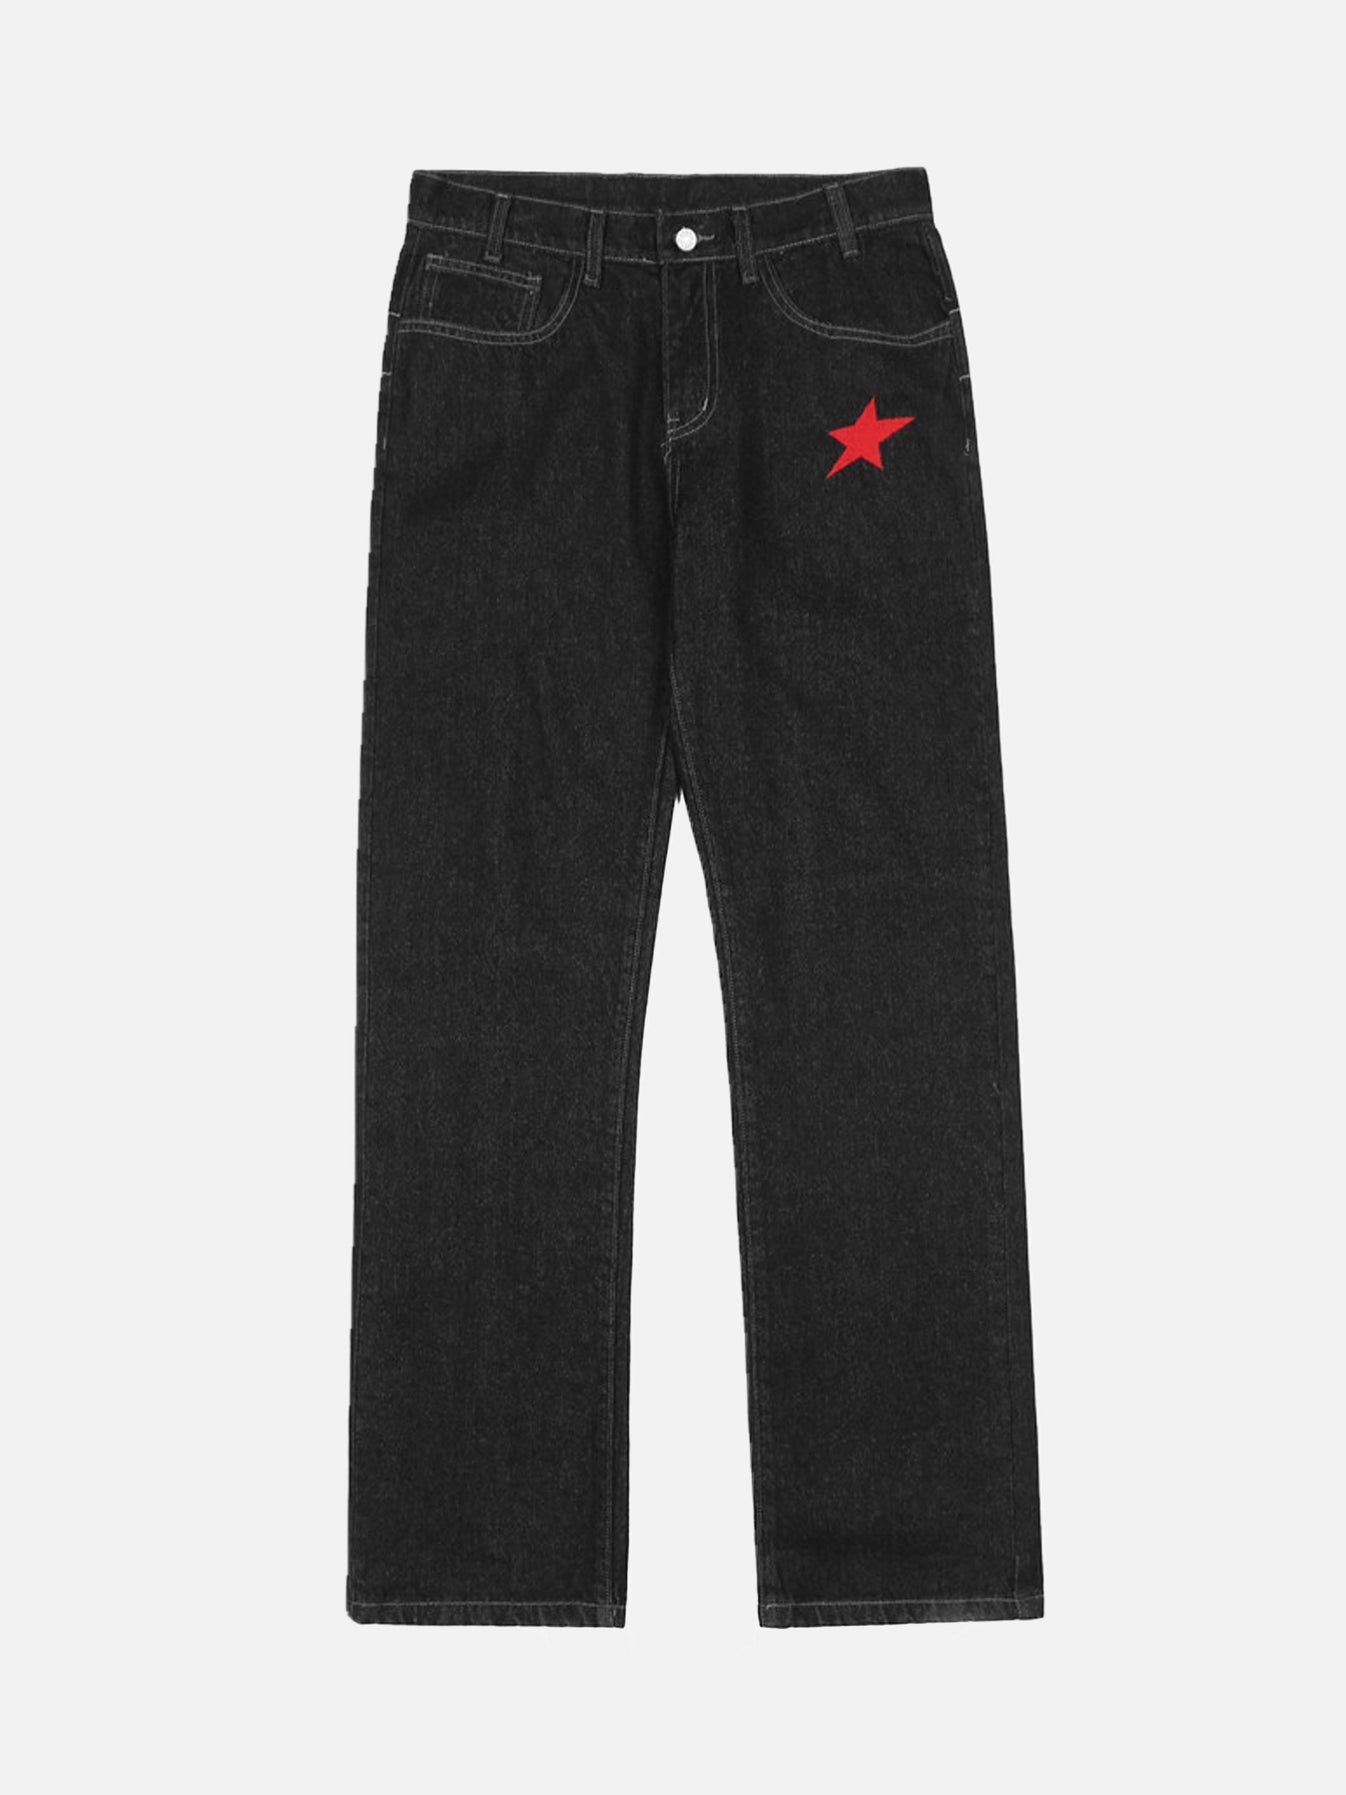 Regular Embroidered Jeans - STAR